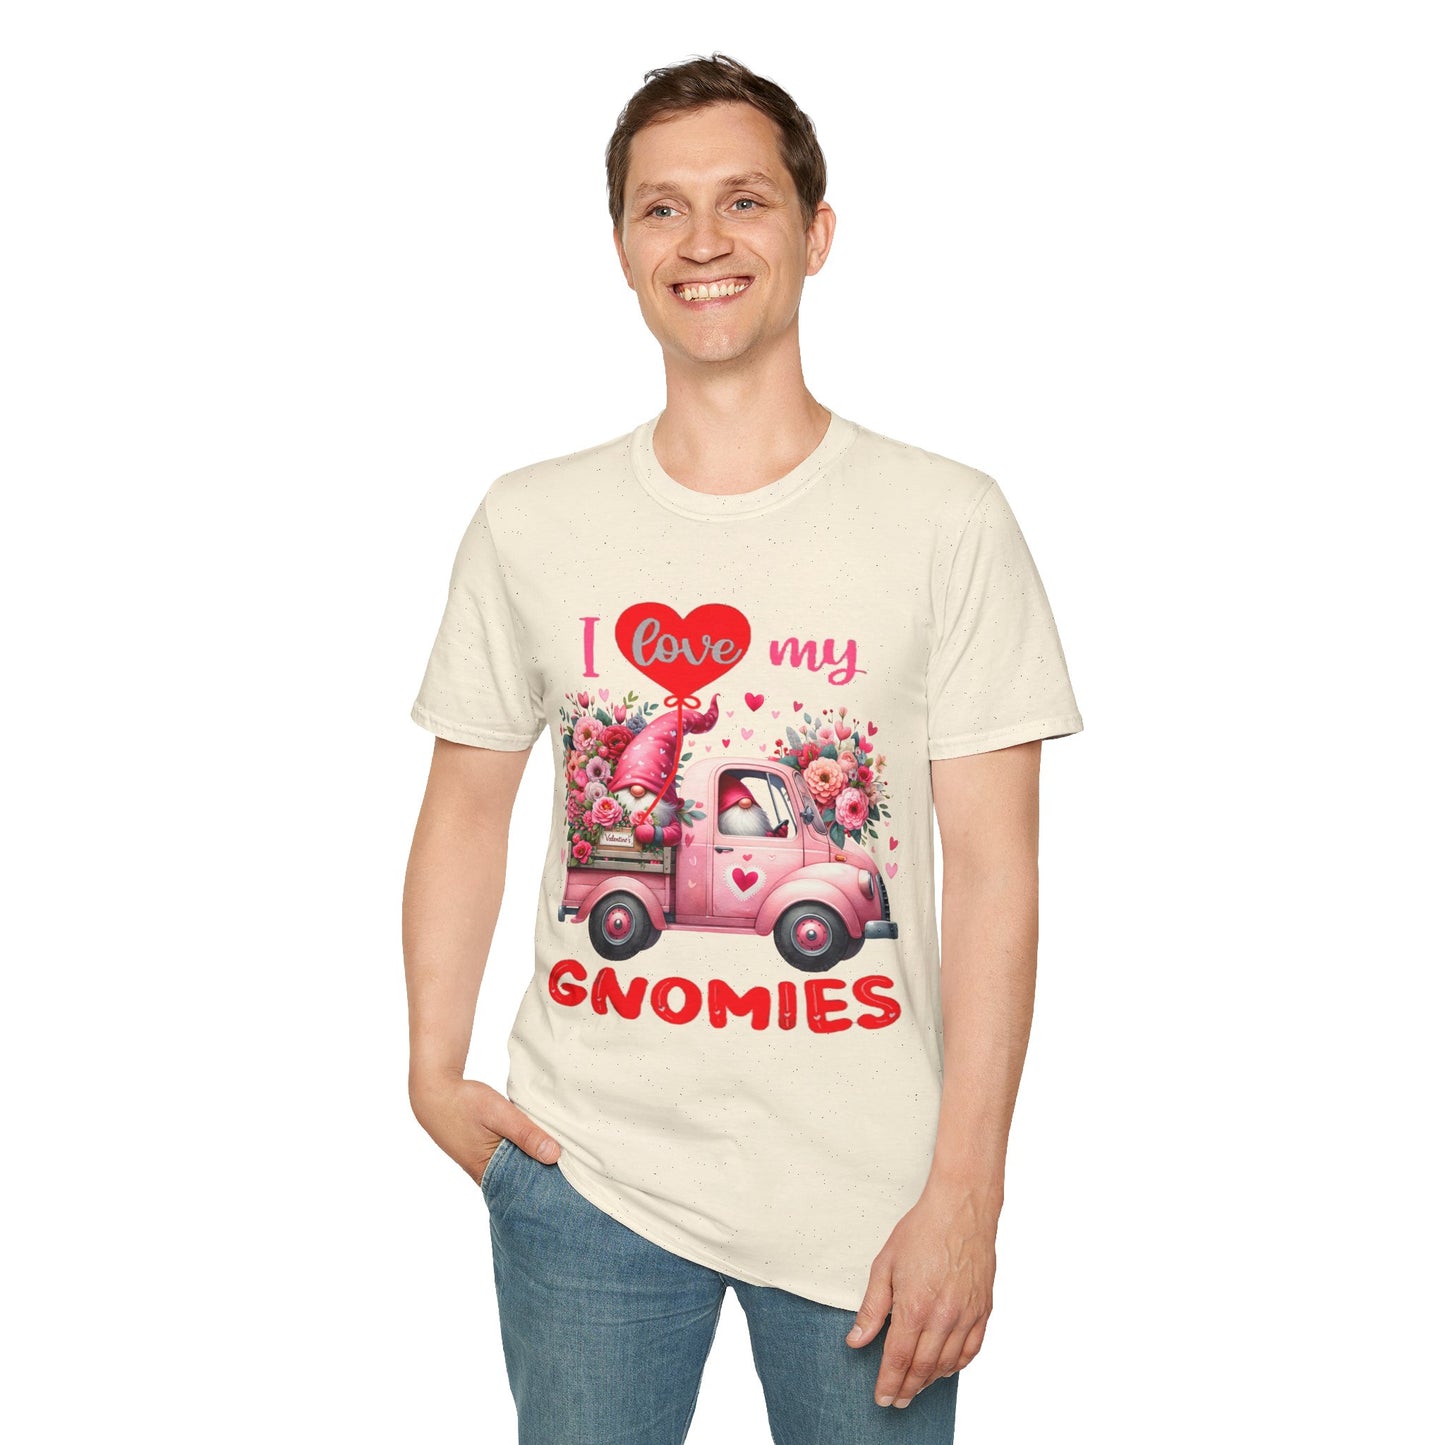 Love my Gnomies Valentine  T-Shirt